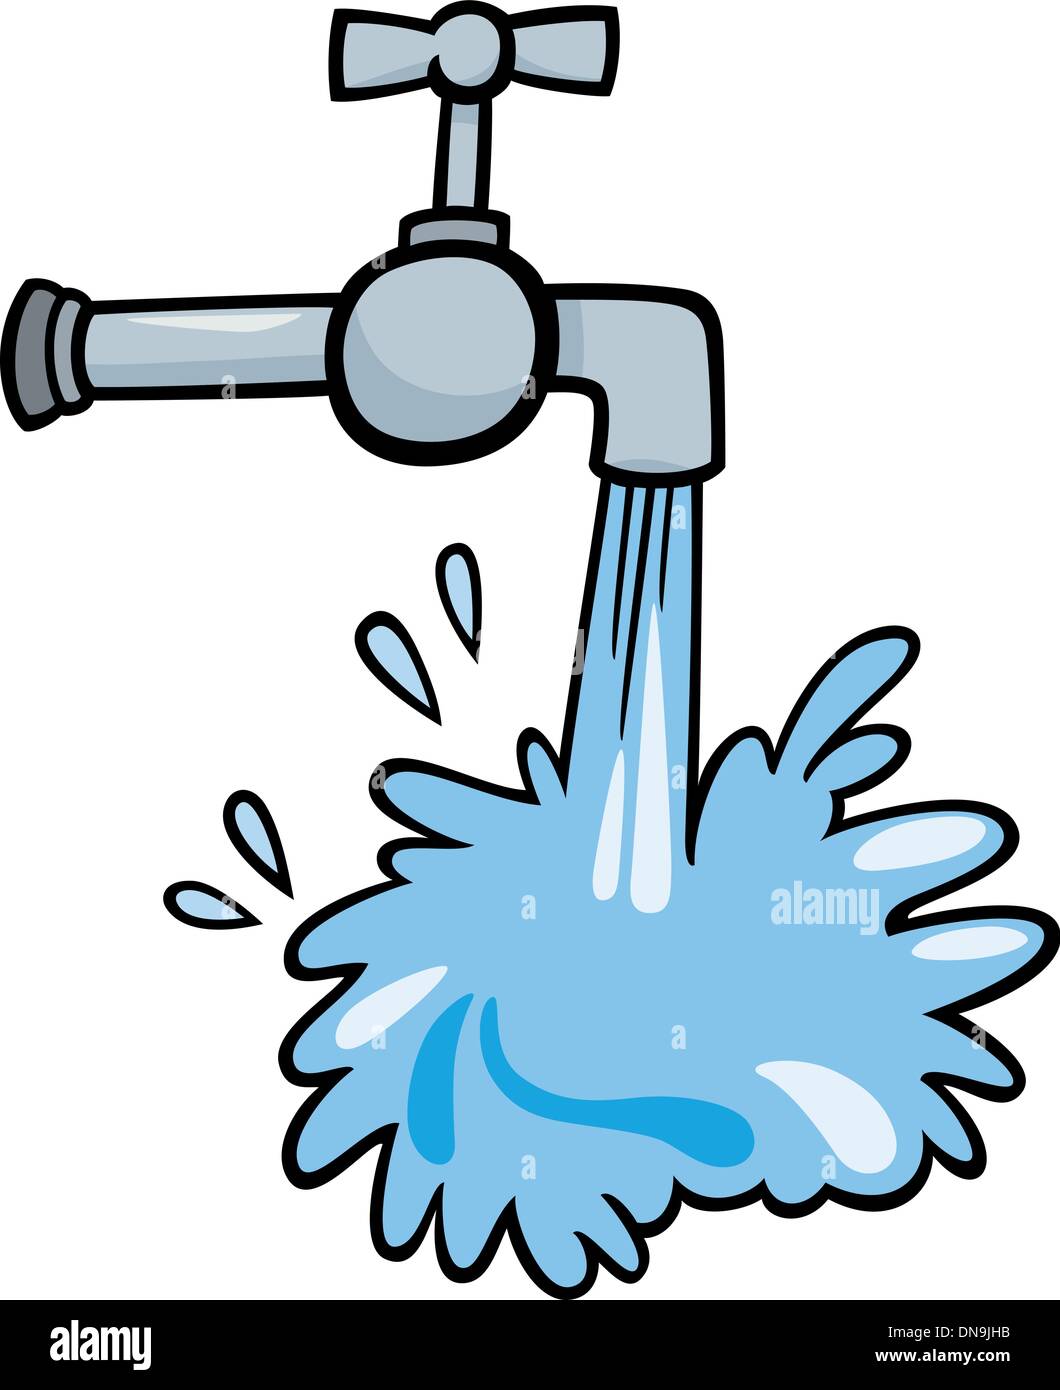 water tap clip art cartoon illustration Stock Vector Image & Art - Alamy